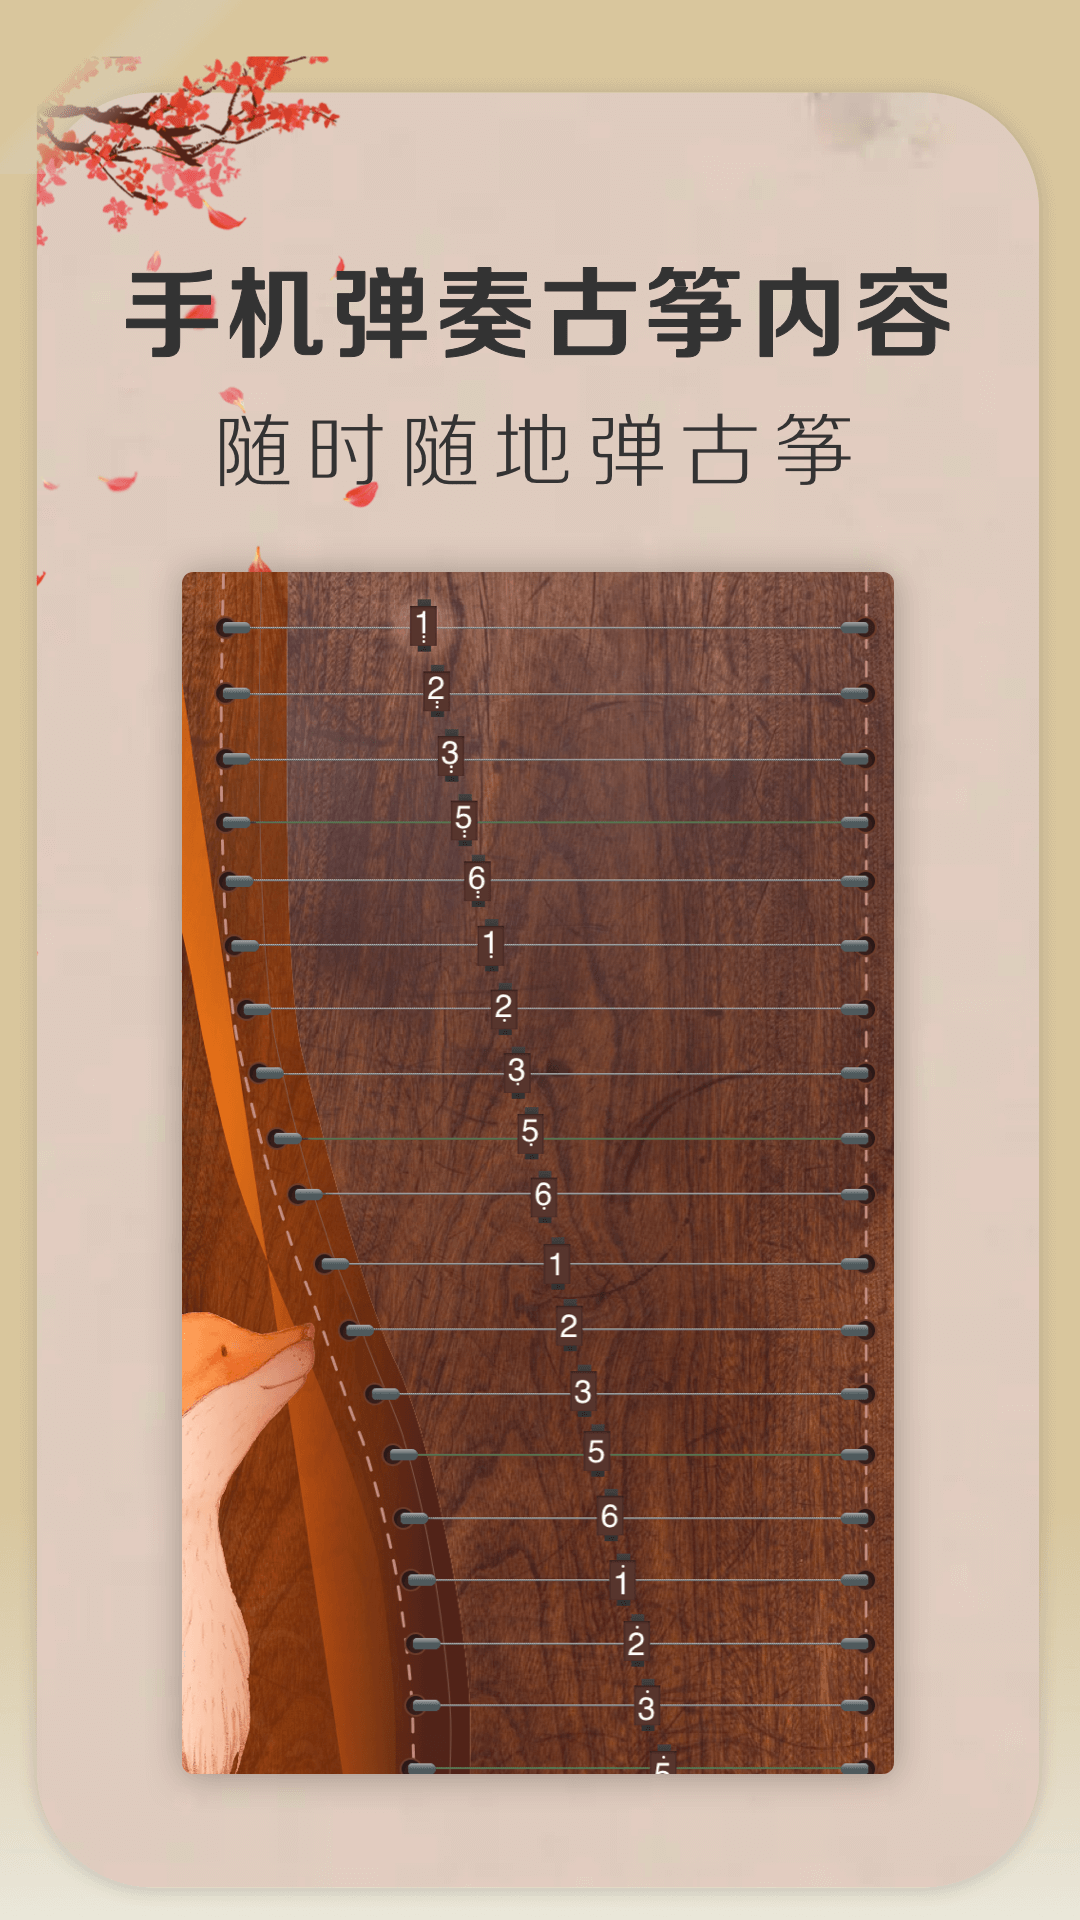 iGuzheng爱弹古筝